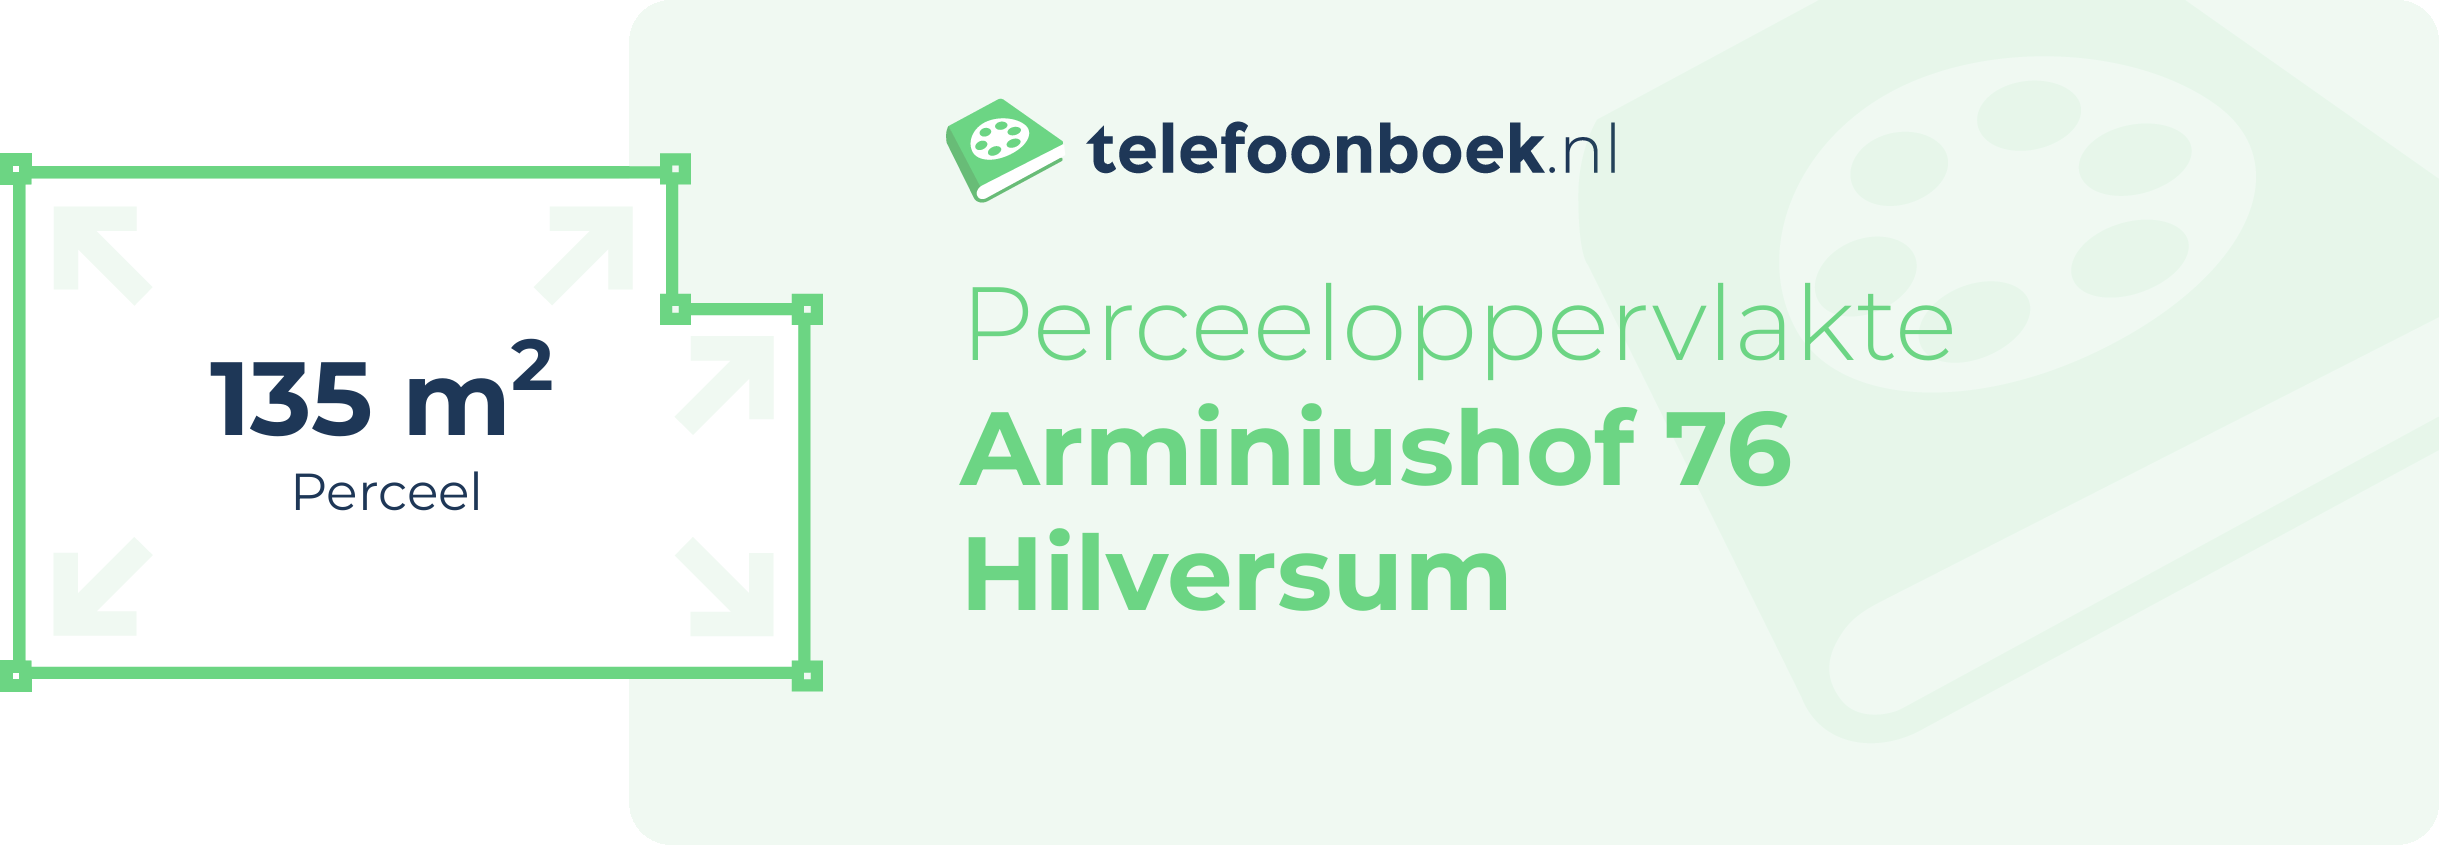 Perceeloppervlakte Arminiushof 76 Hilversum